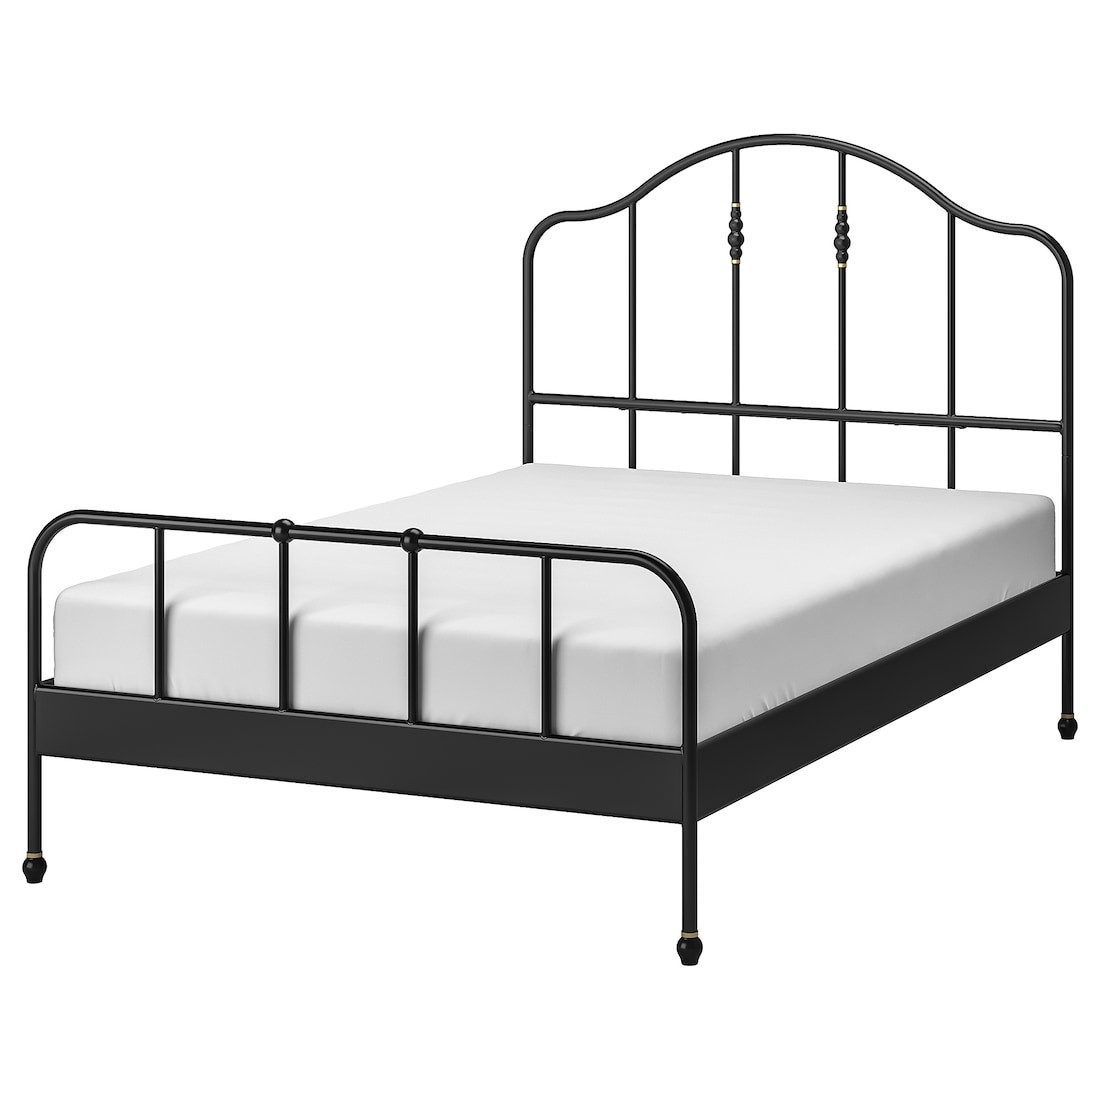 SAGSTUA САГСТУА Ліжко двоспальне, чорний / Lindbaden, 140x200 см